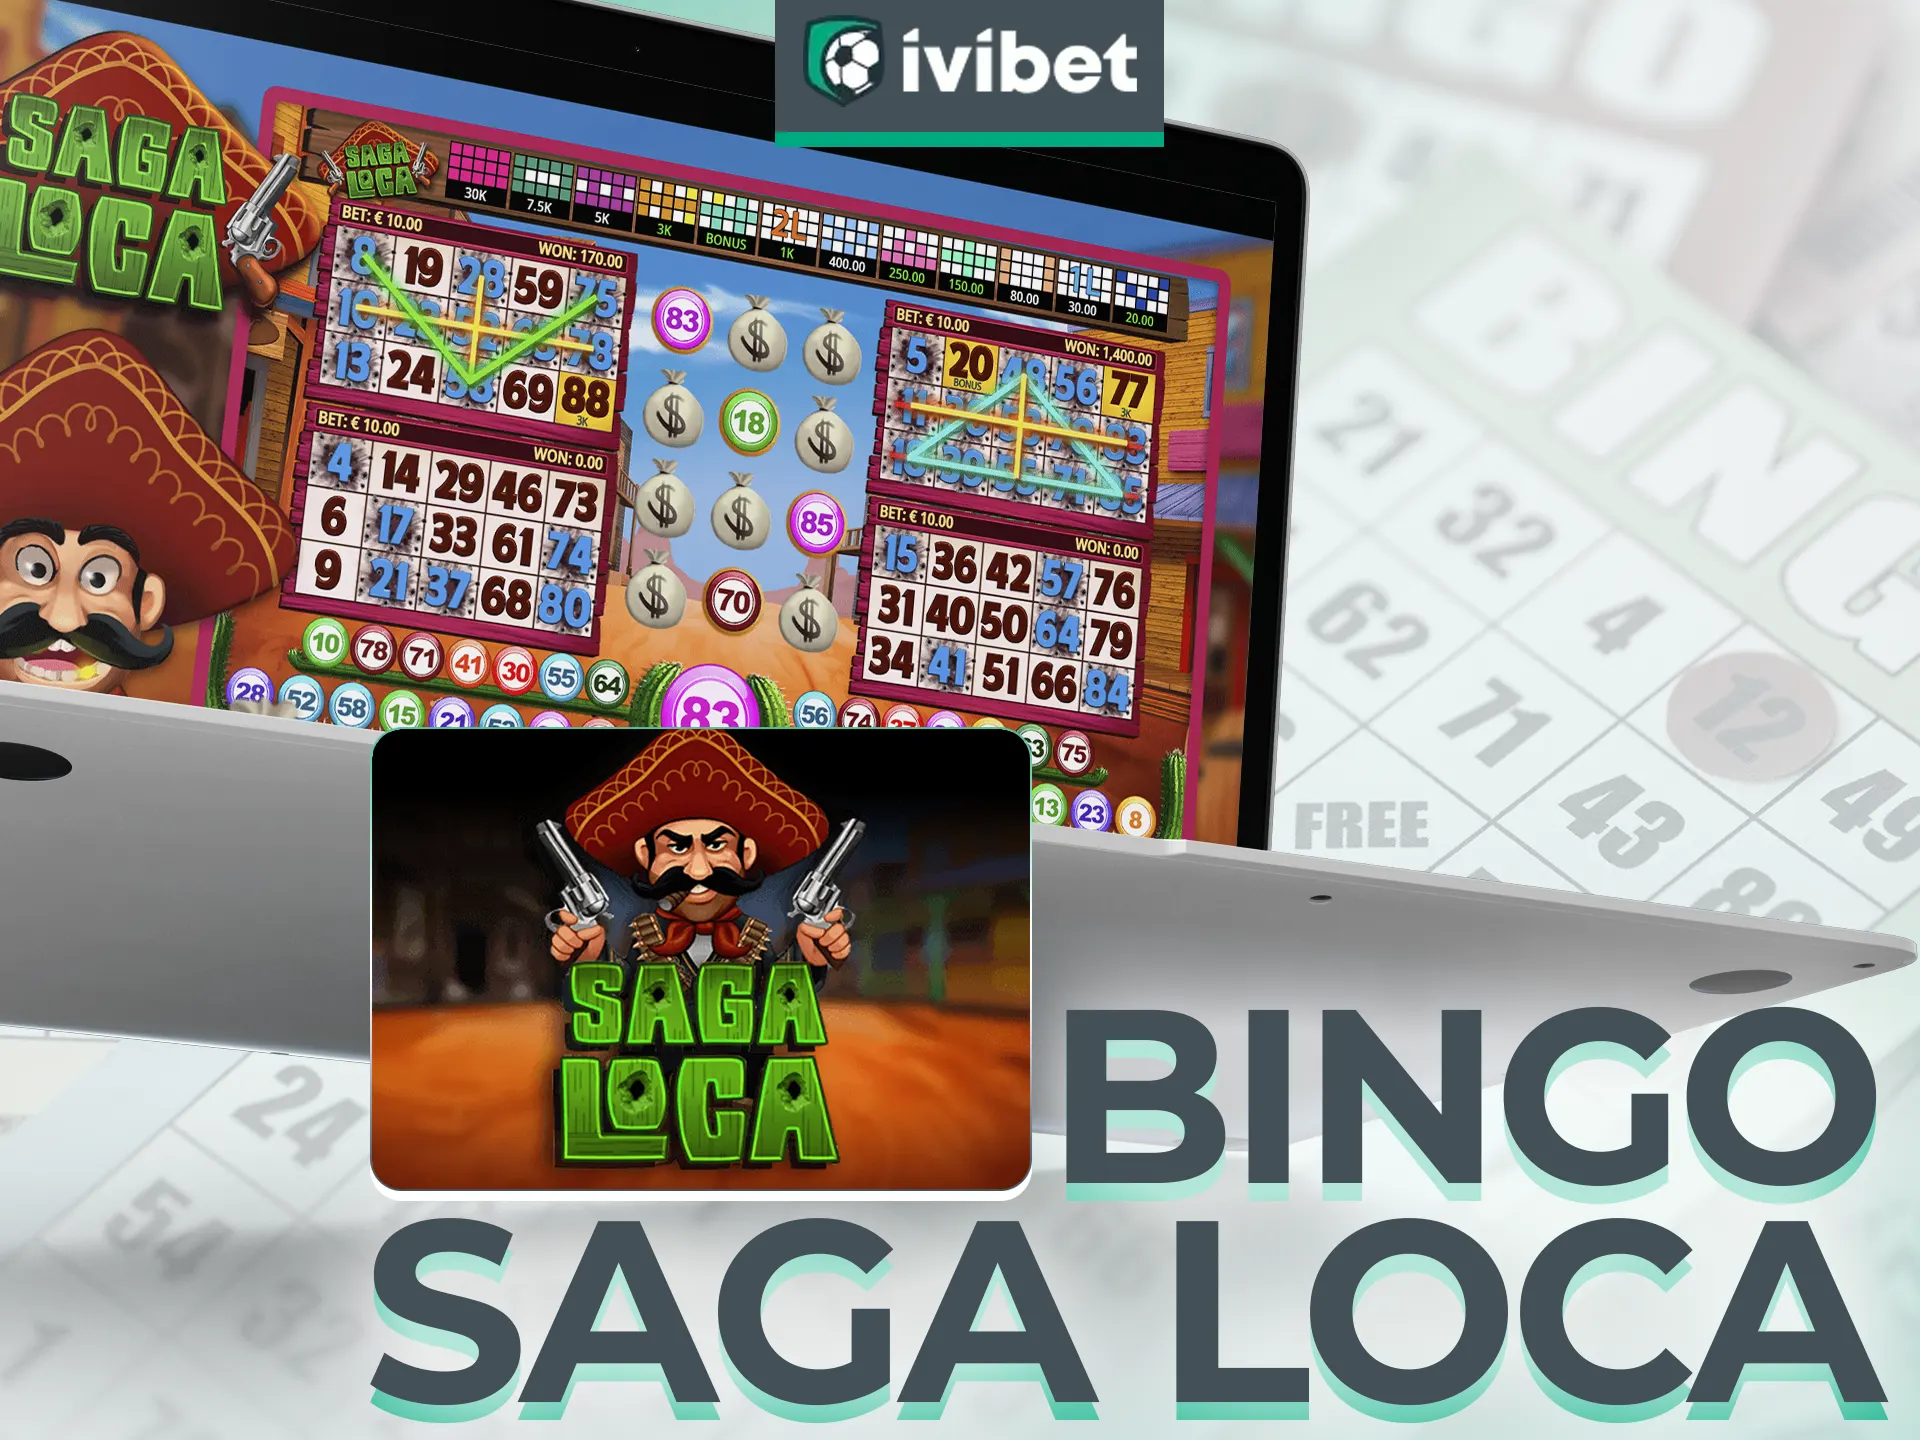 Bingo Saga Loca da Ivibet - Bingo com tema do Velho Oeste.